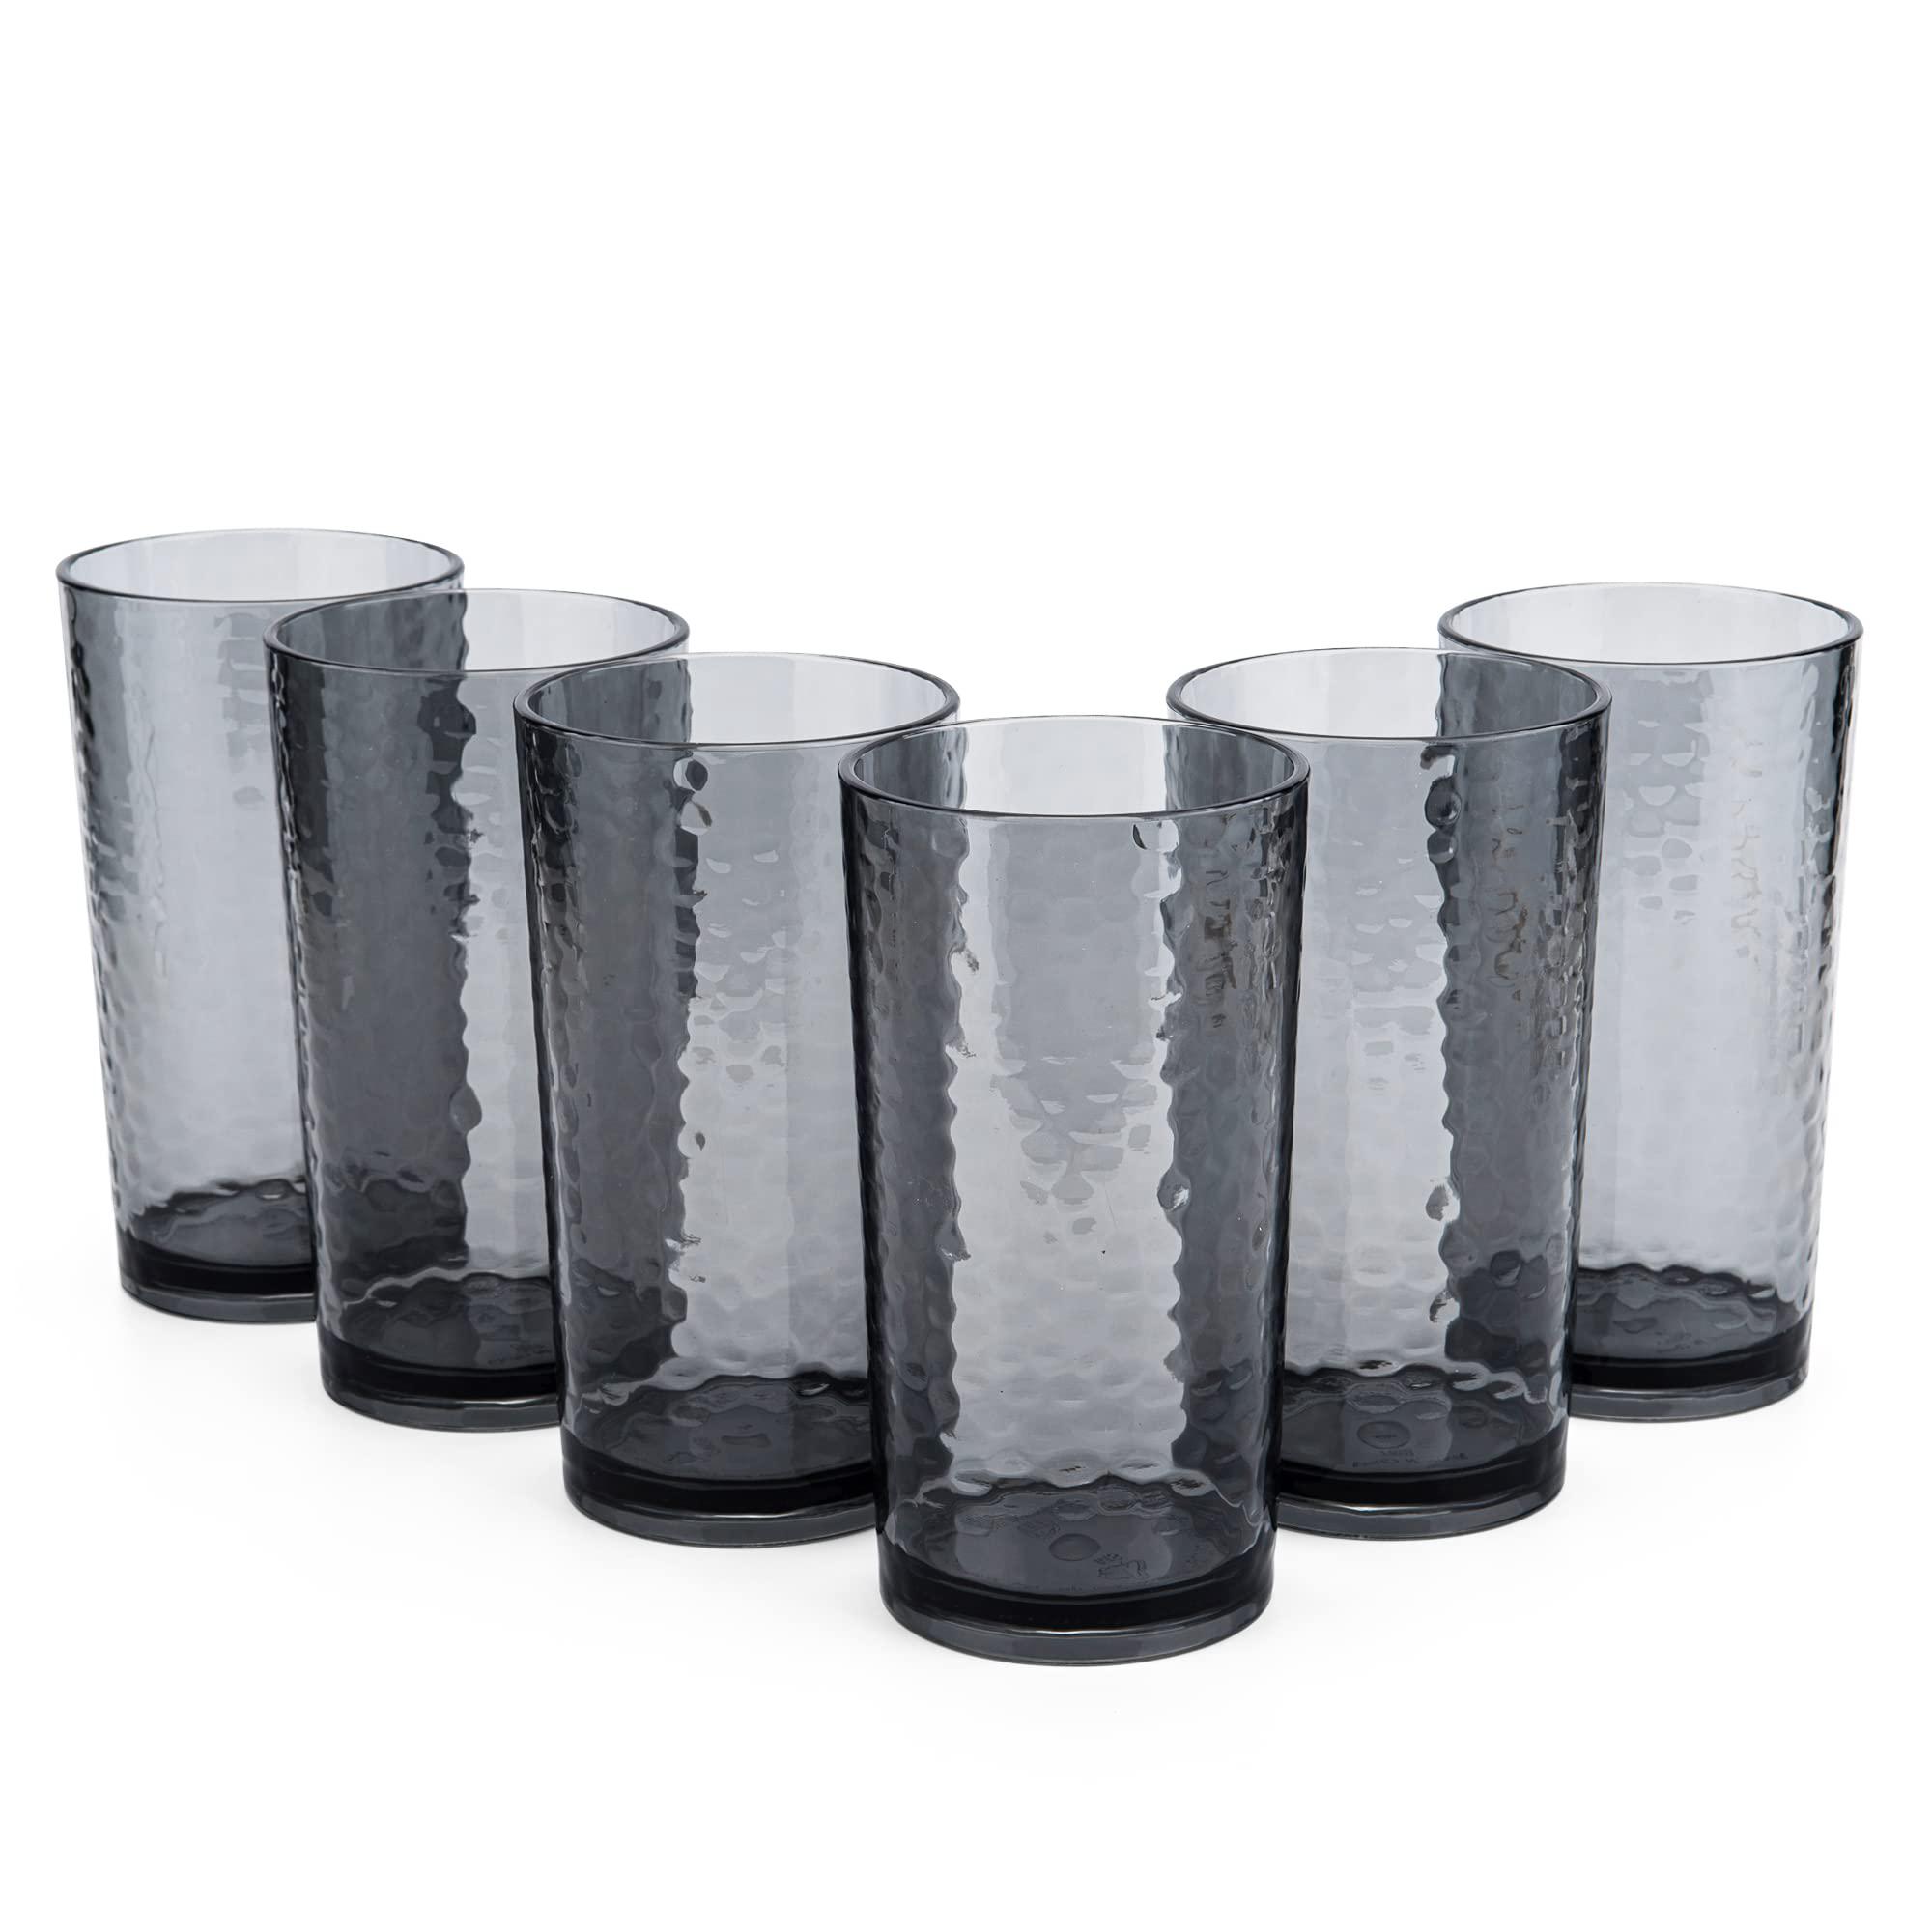 kx-ware 20-ounce acrylic glasses plastic tumbler, set of 6 smoky grey - hammered style, dishwasher safe, bpa free